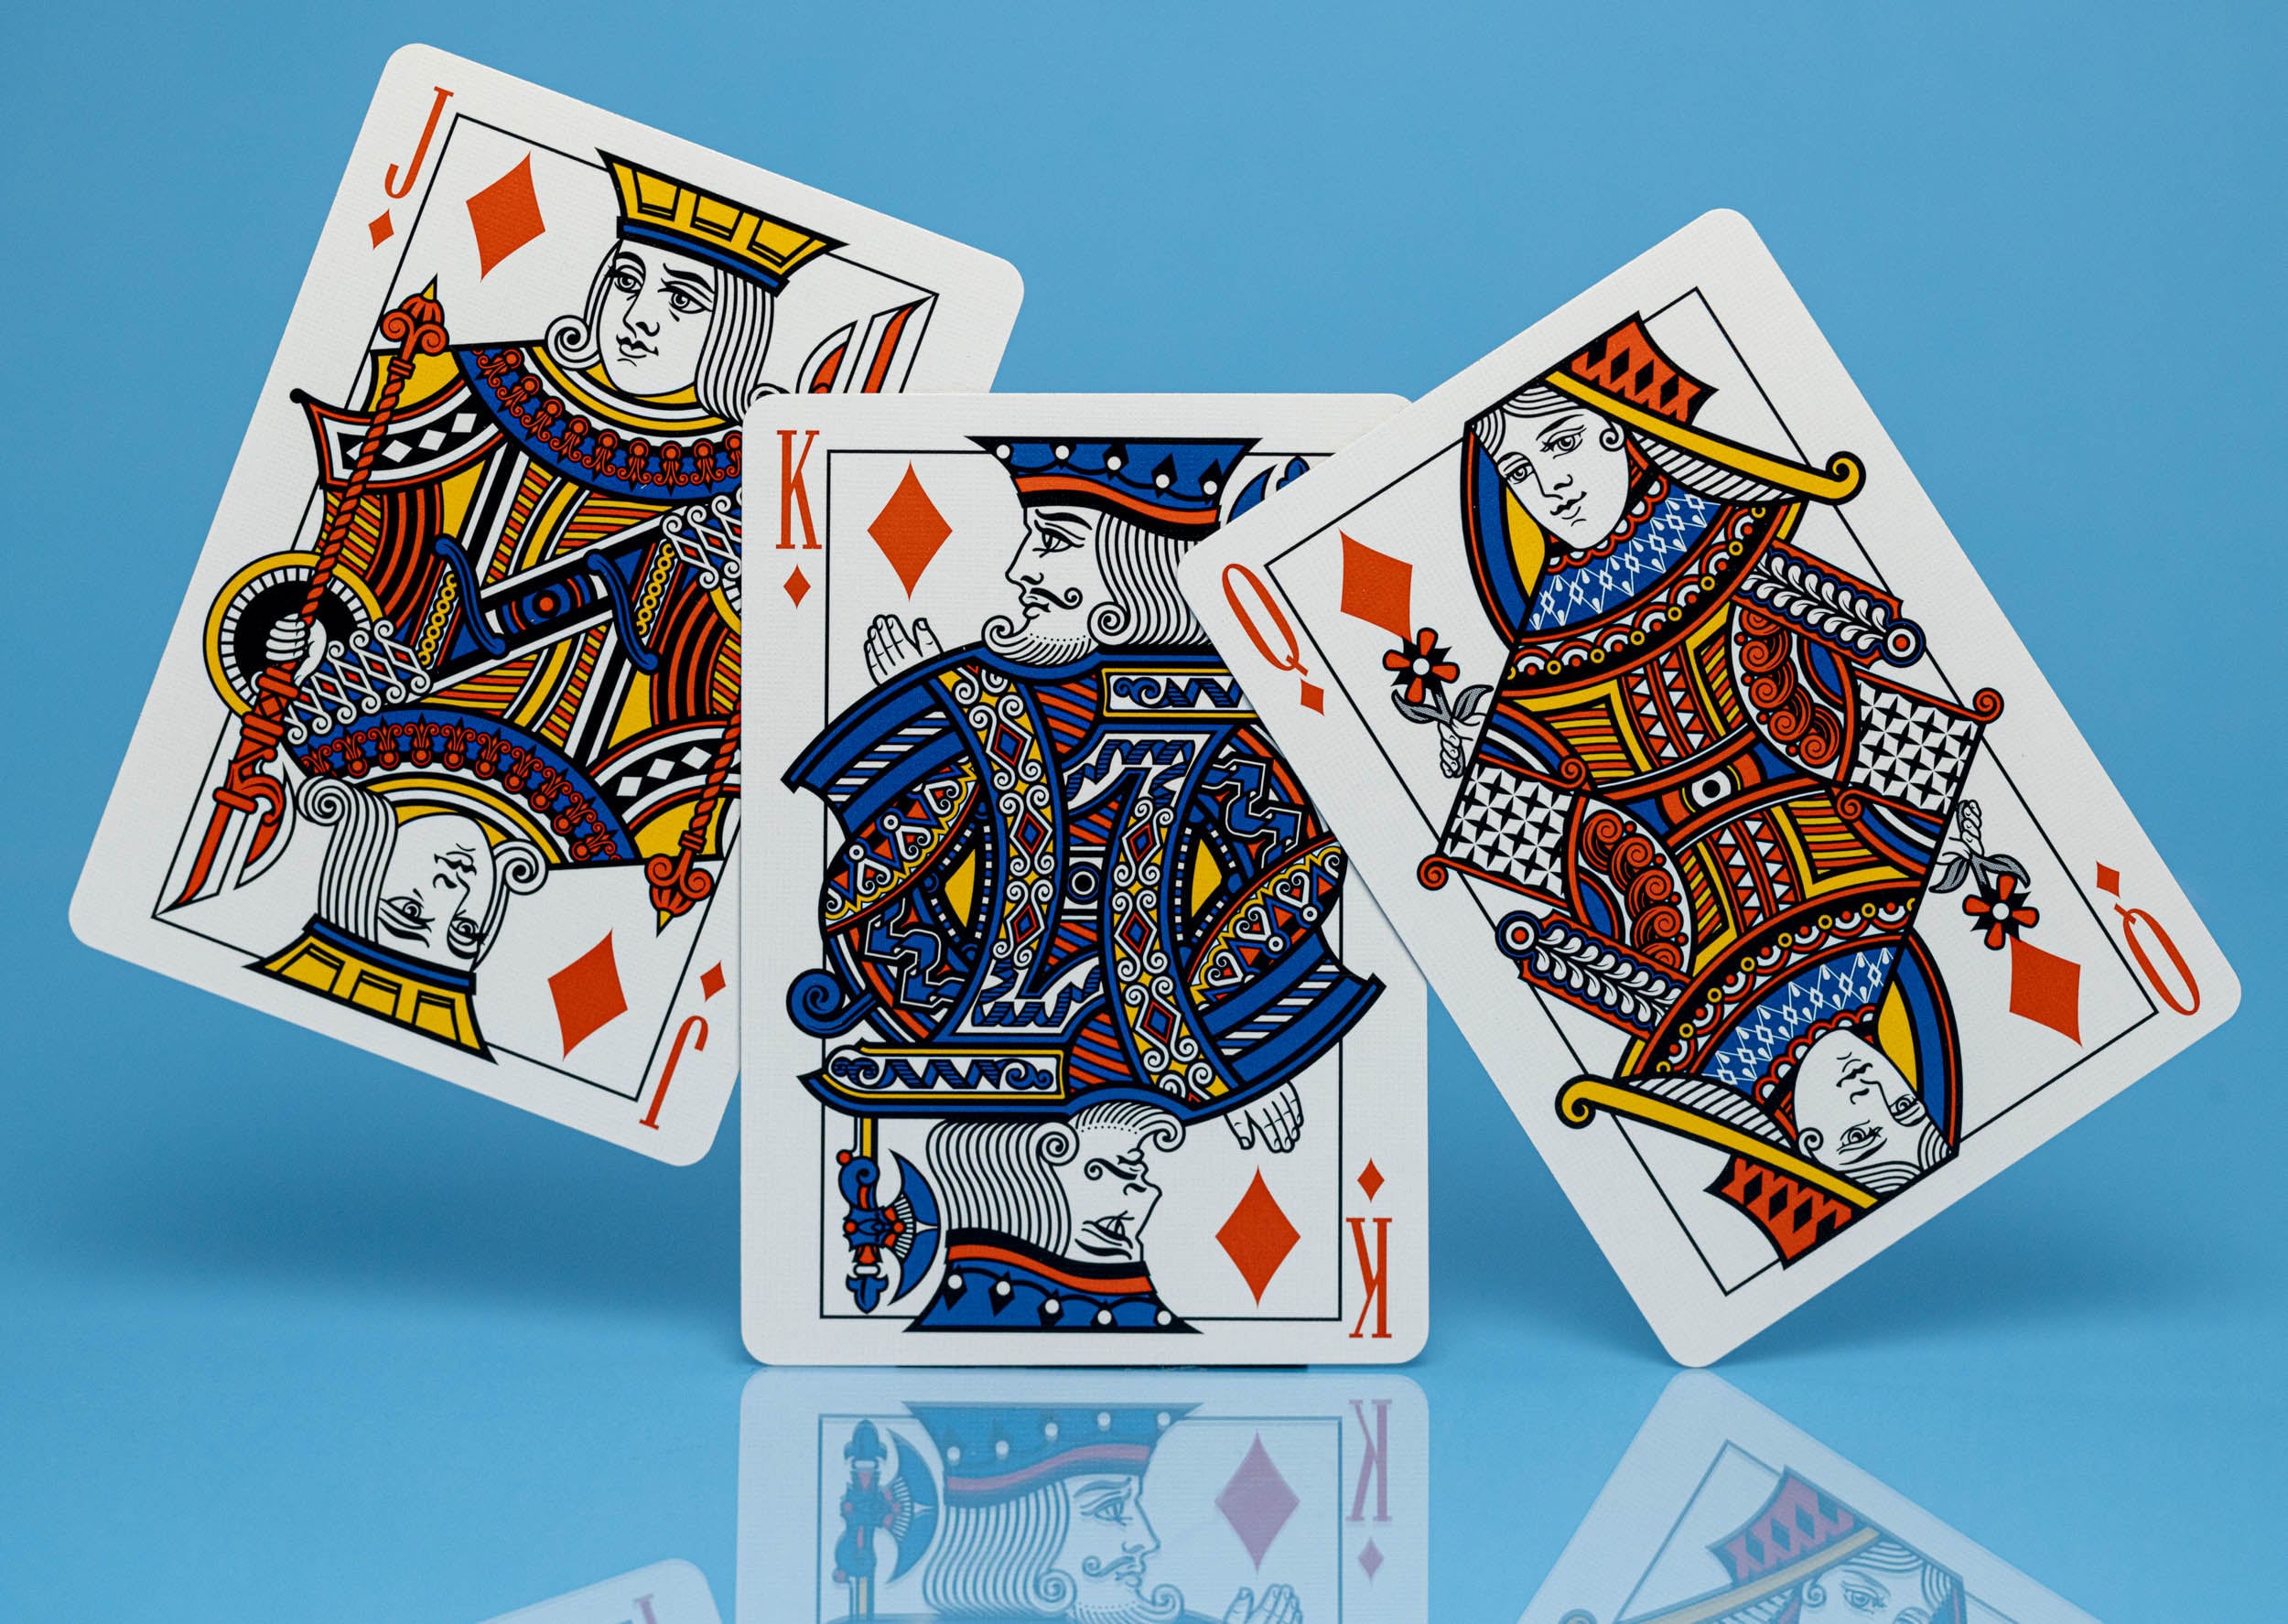 Hookbox (18 Poker Cards) - Print & Play